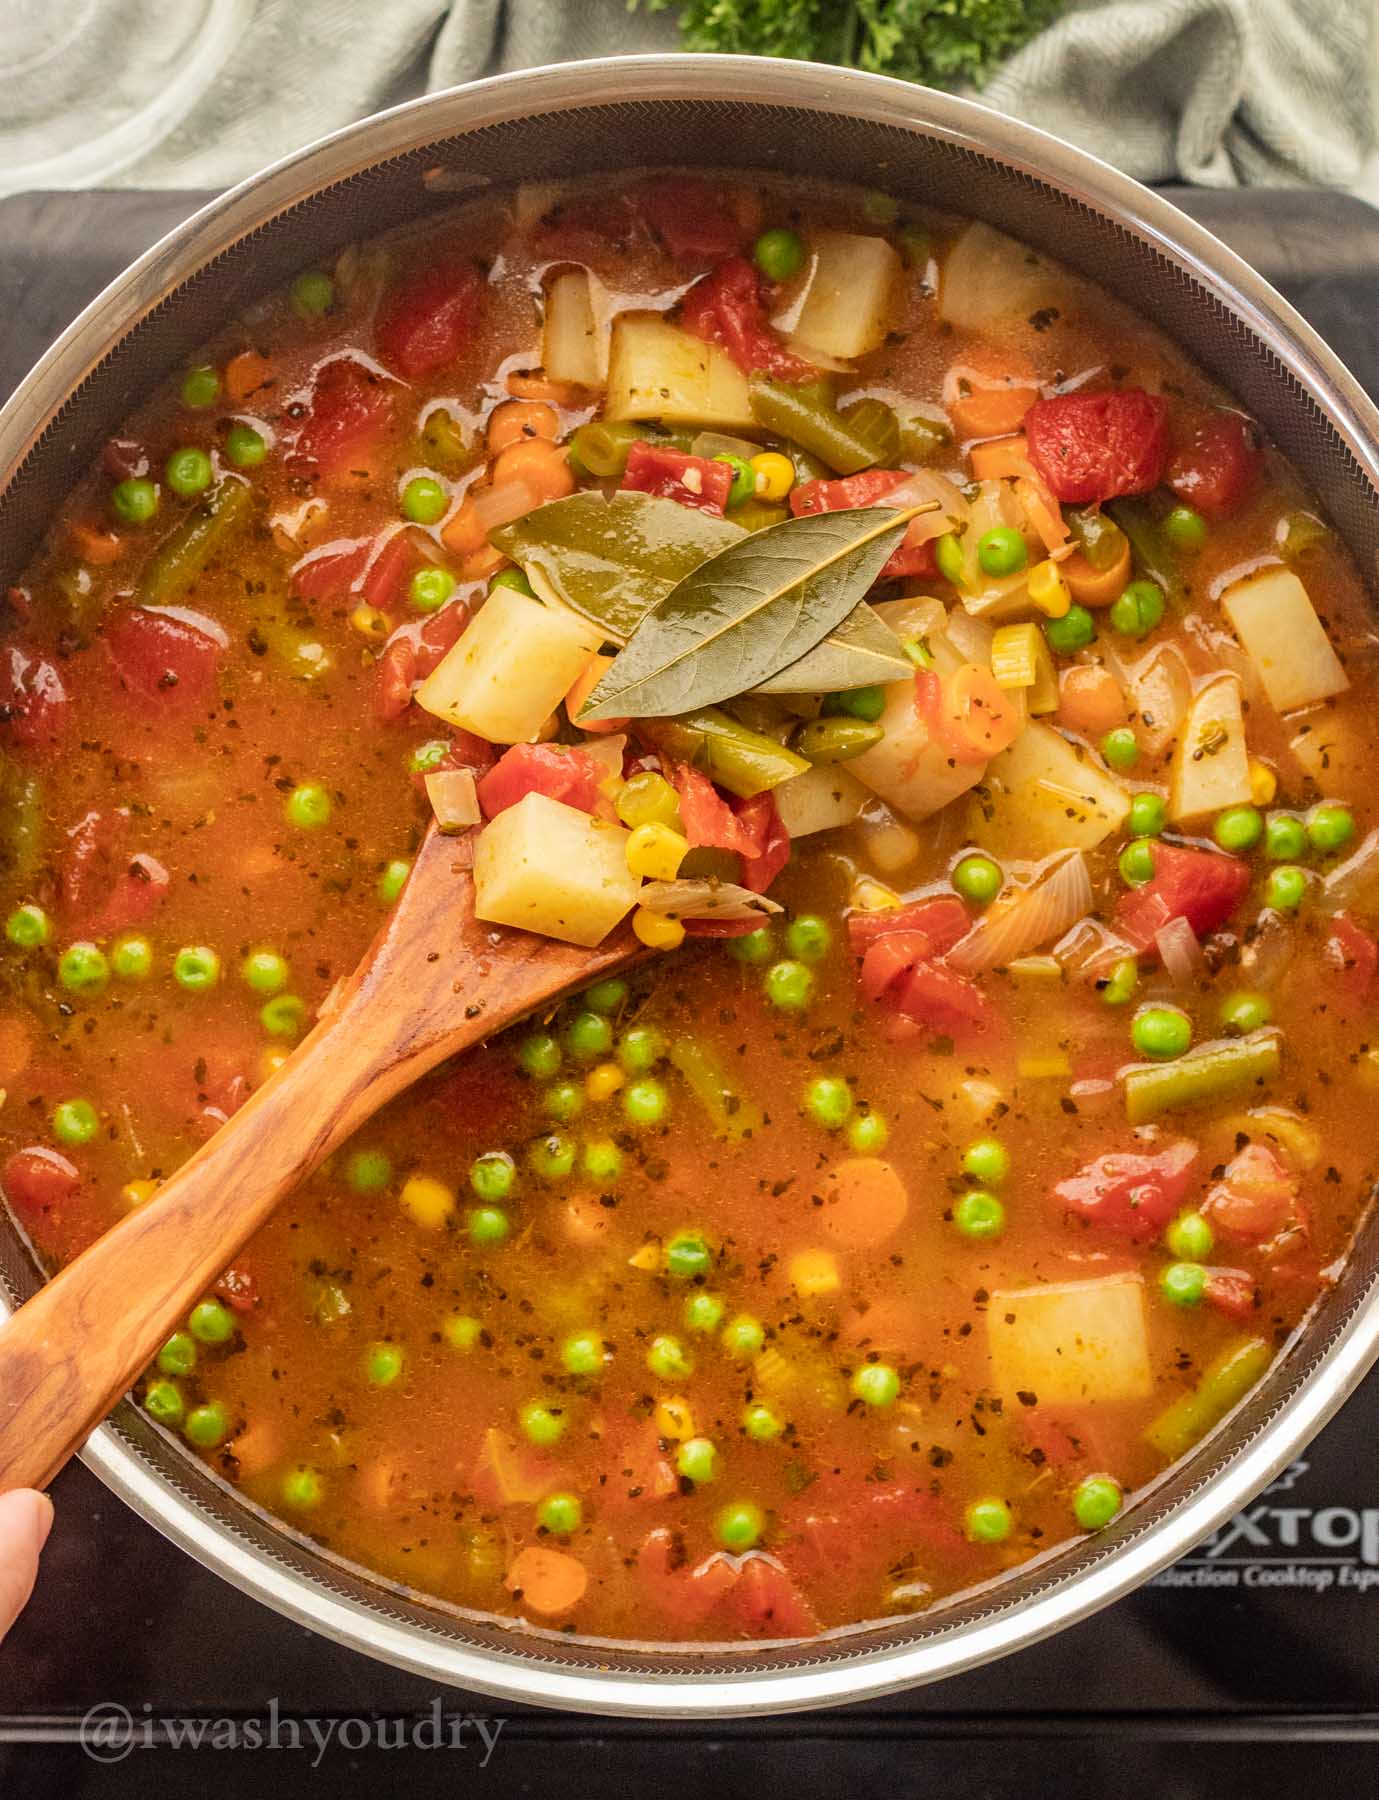 https://iwashyoudry.com/wp-content/uploads/2020/01/Vegetable-Soup-Cooked-1.jpg